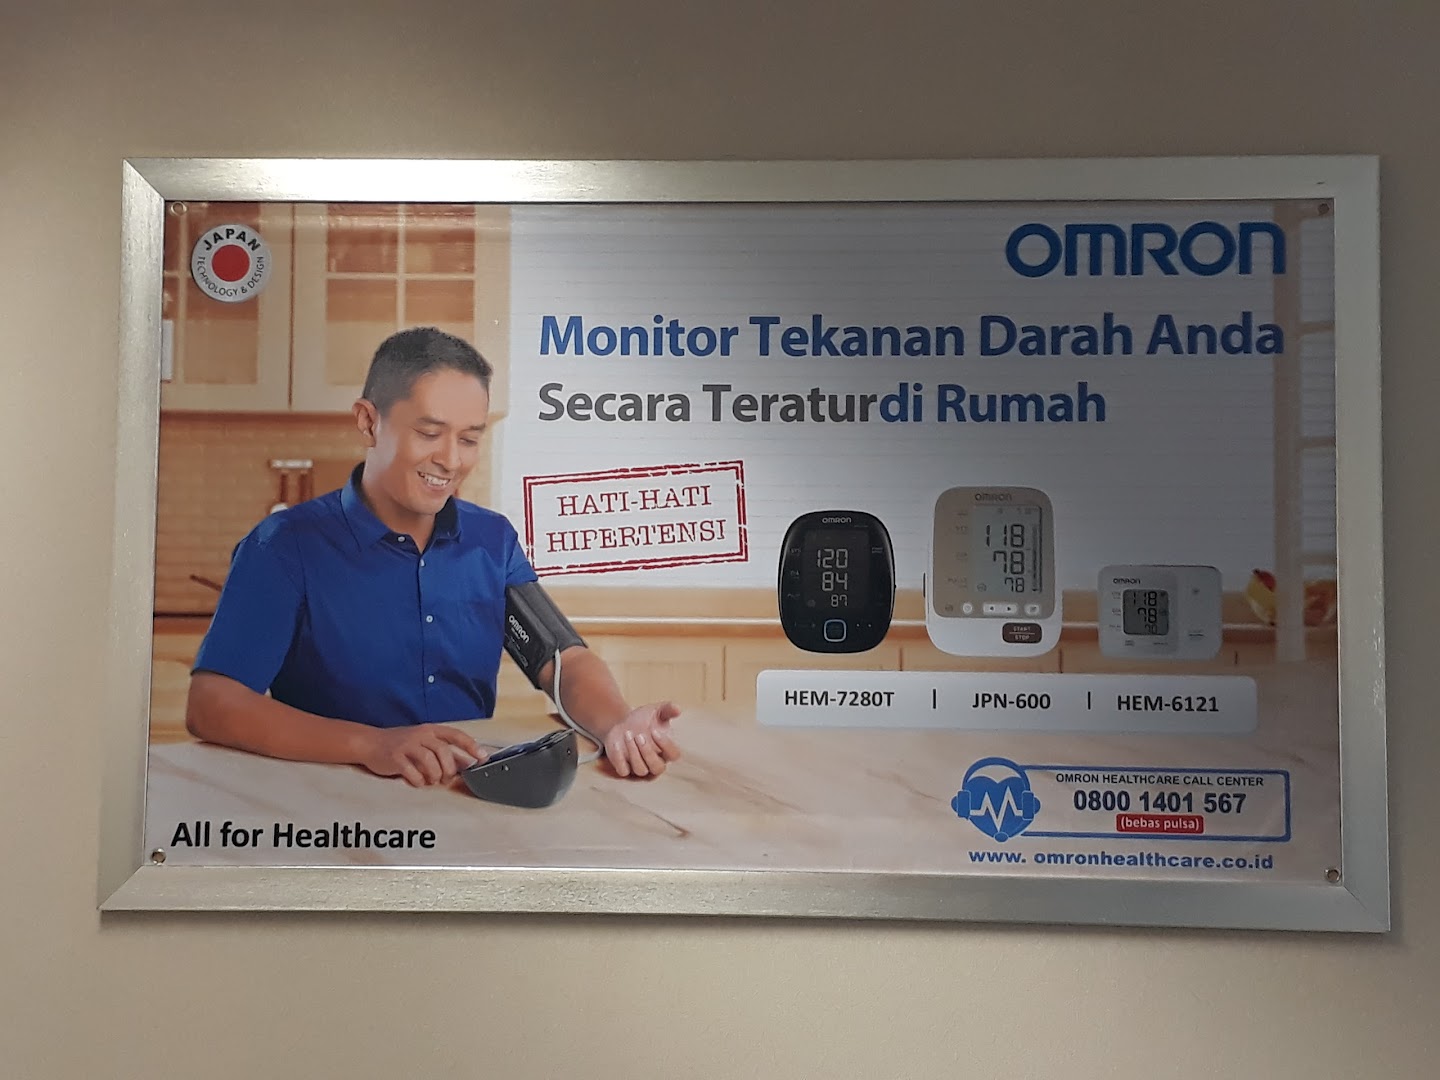 Omron Healthcare Indonesia Photo